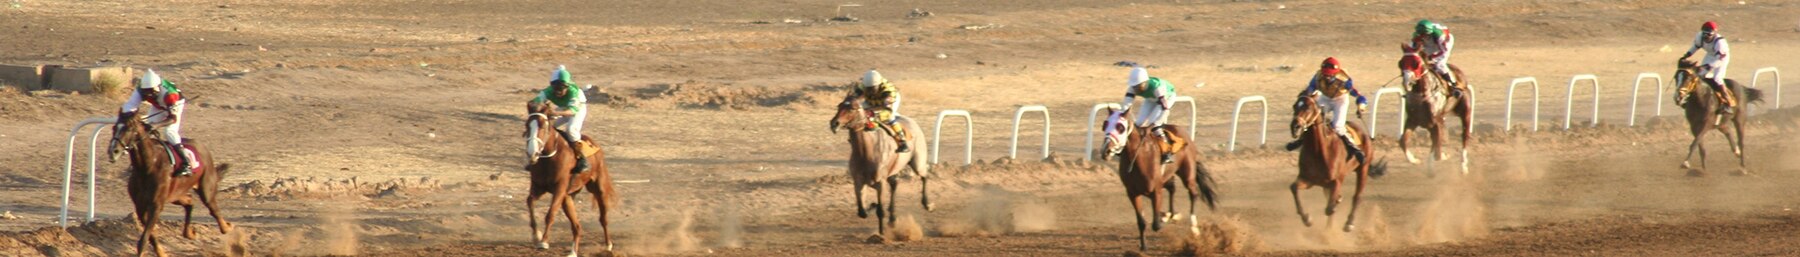 Khartum banner Horse racing.jpg